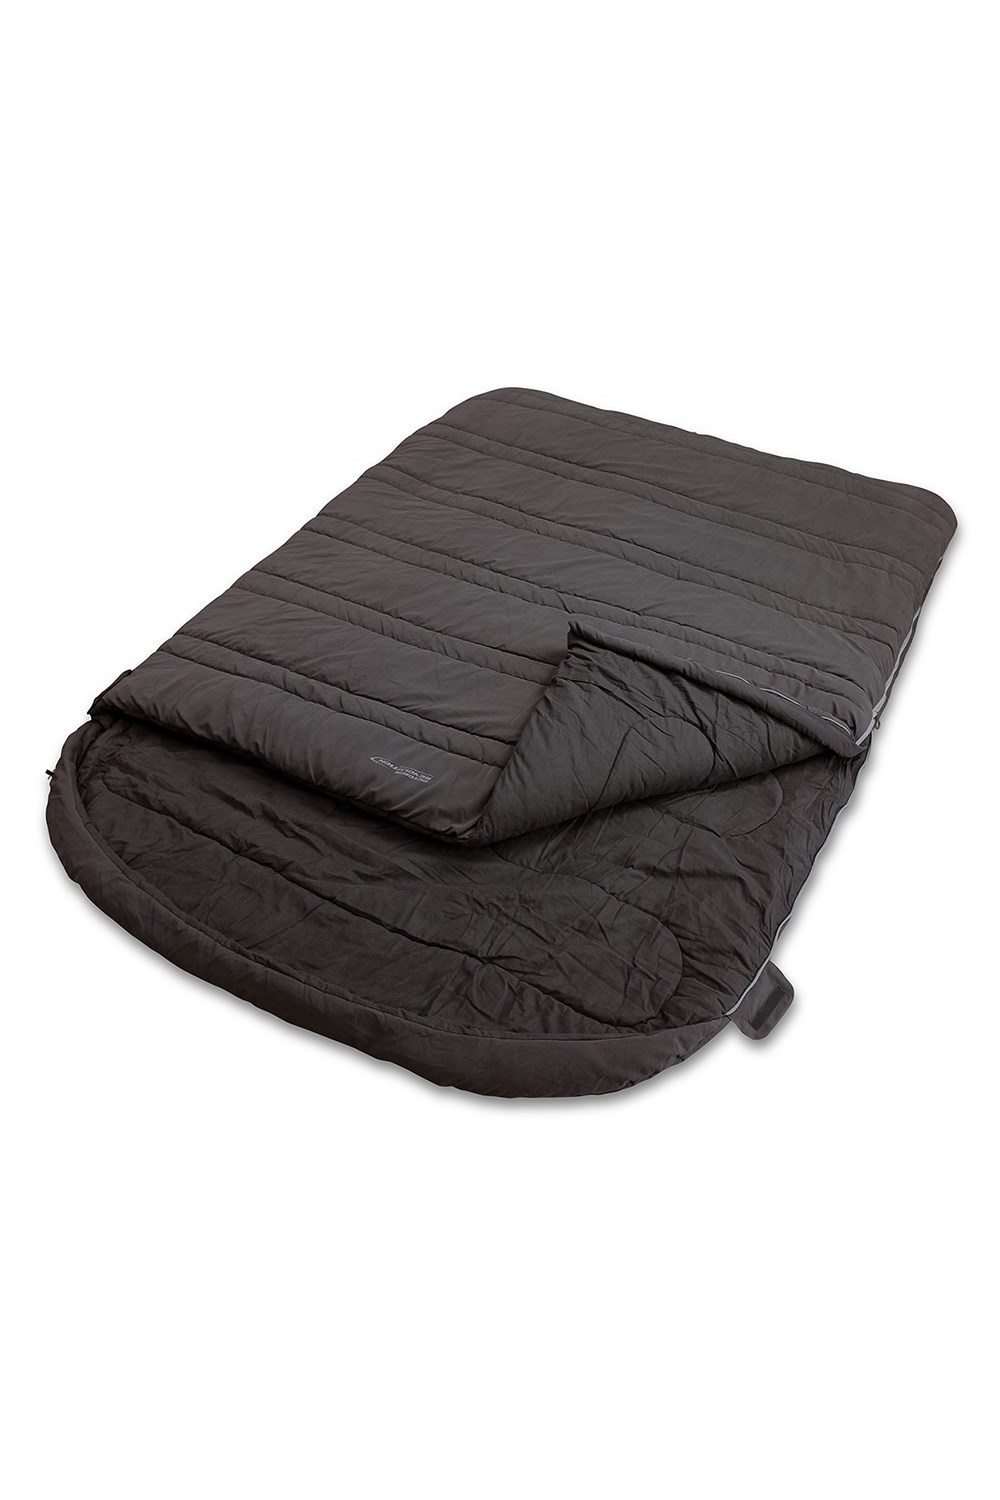 Star Fall King Sleeping Bag 400 + 2 Pillow Cases -